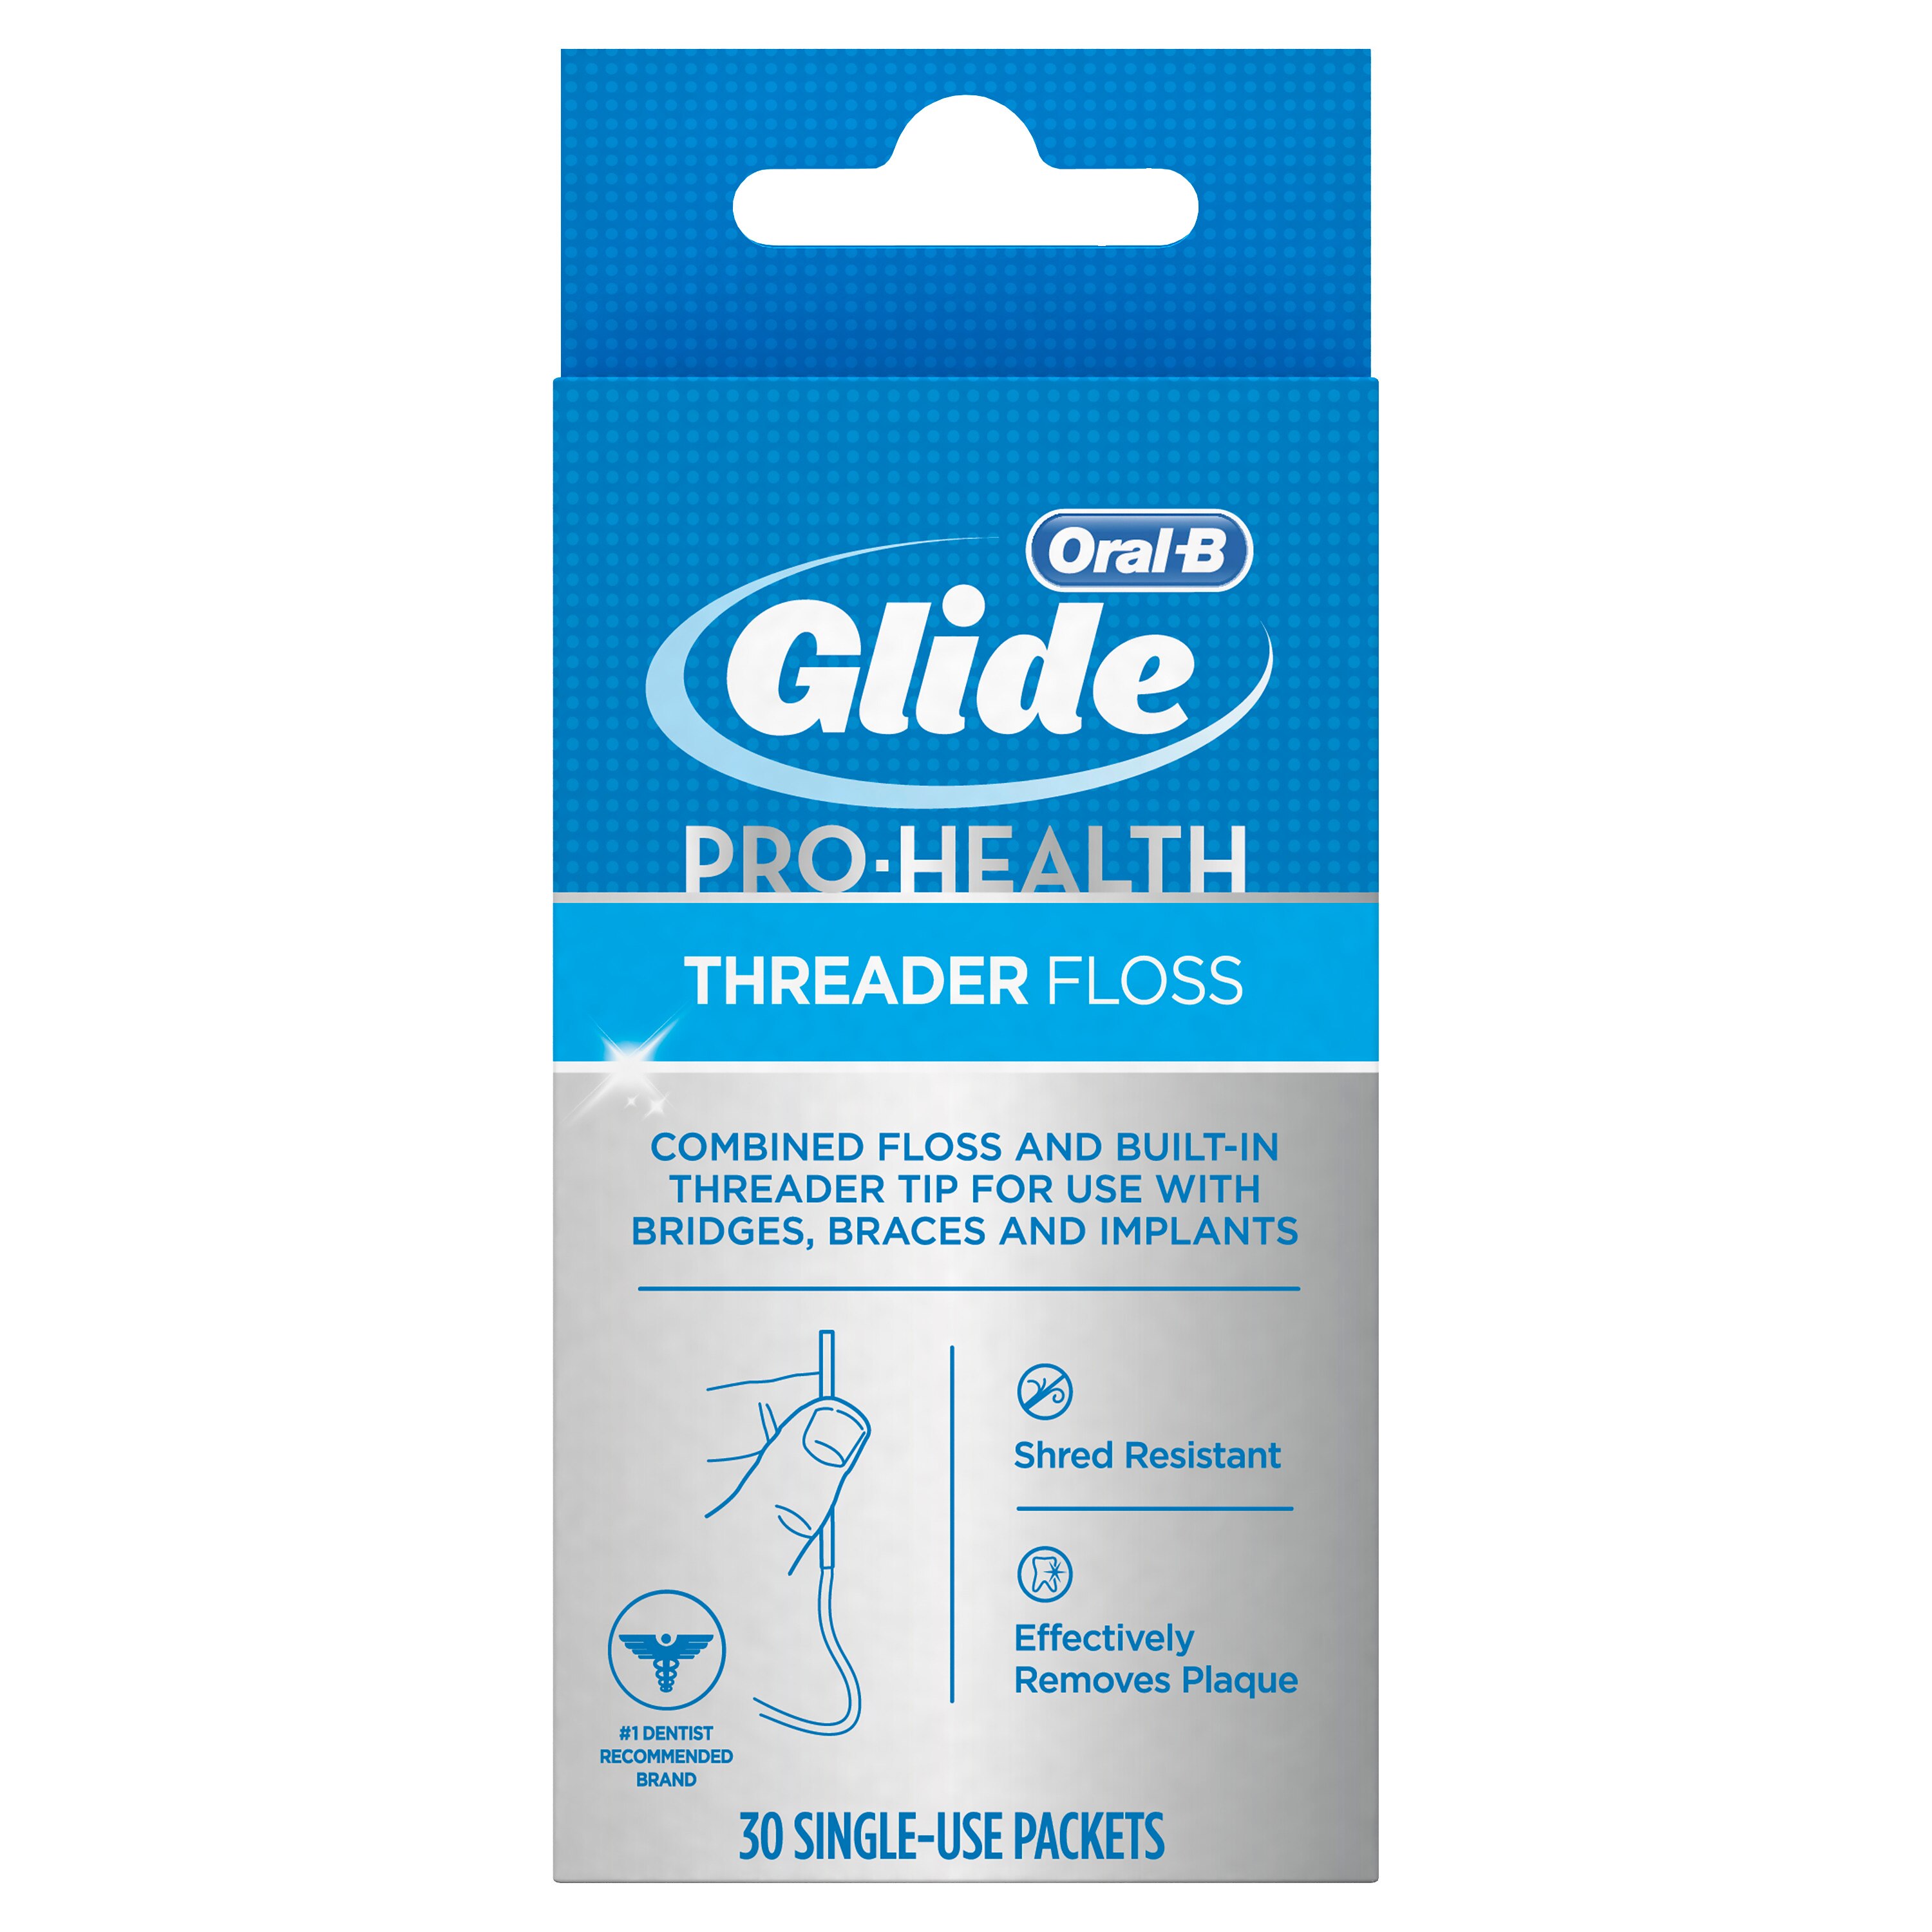 Oral-B Glide Pro-Health Dental Threader Floss, 30 Count